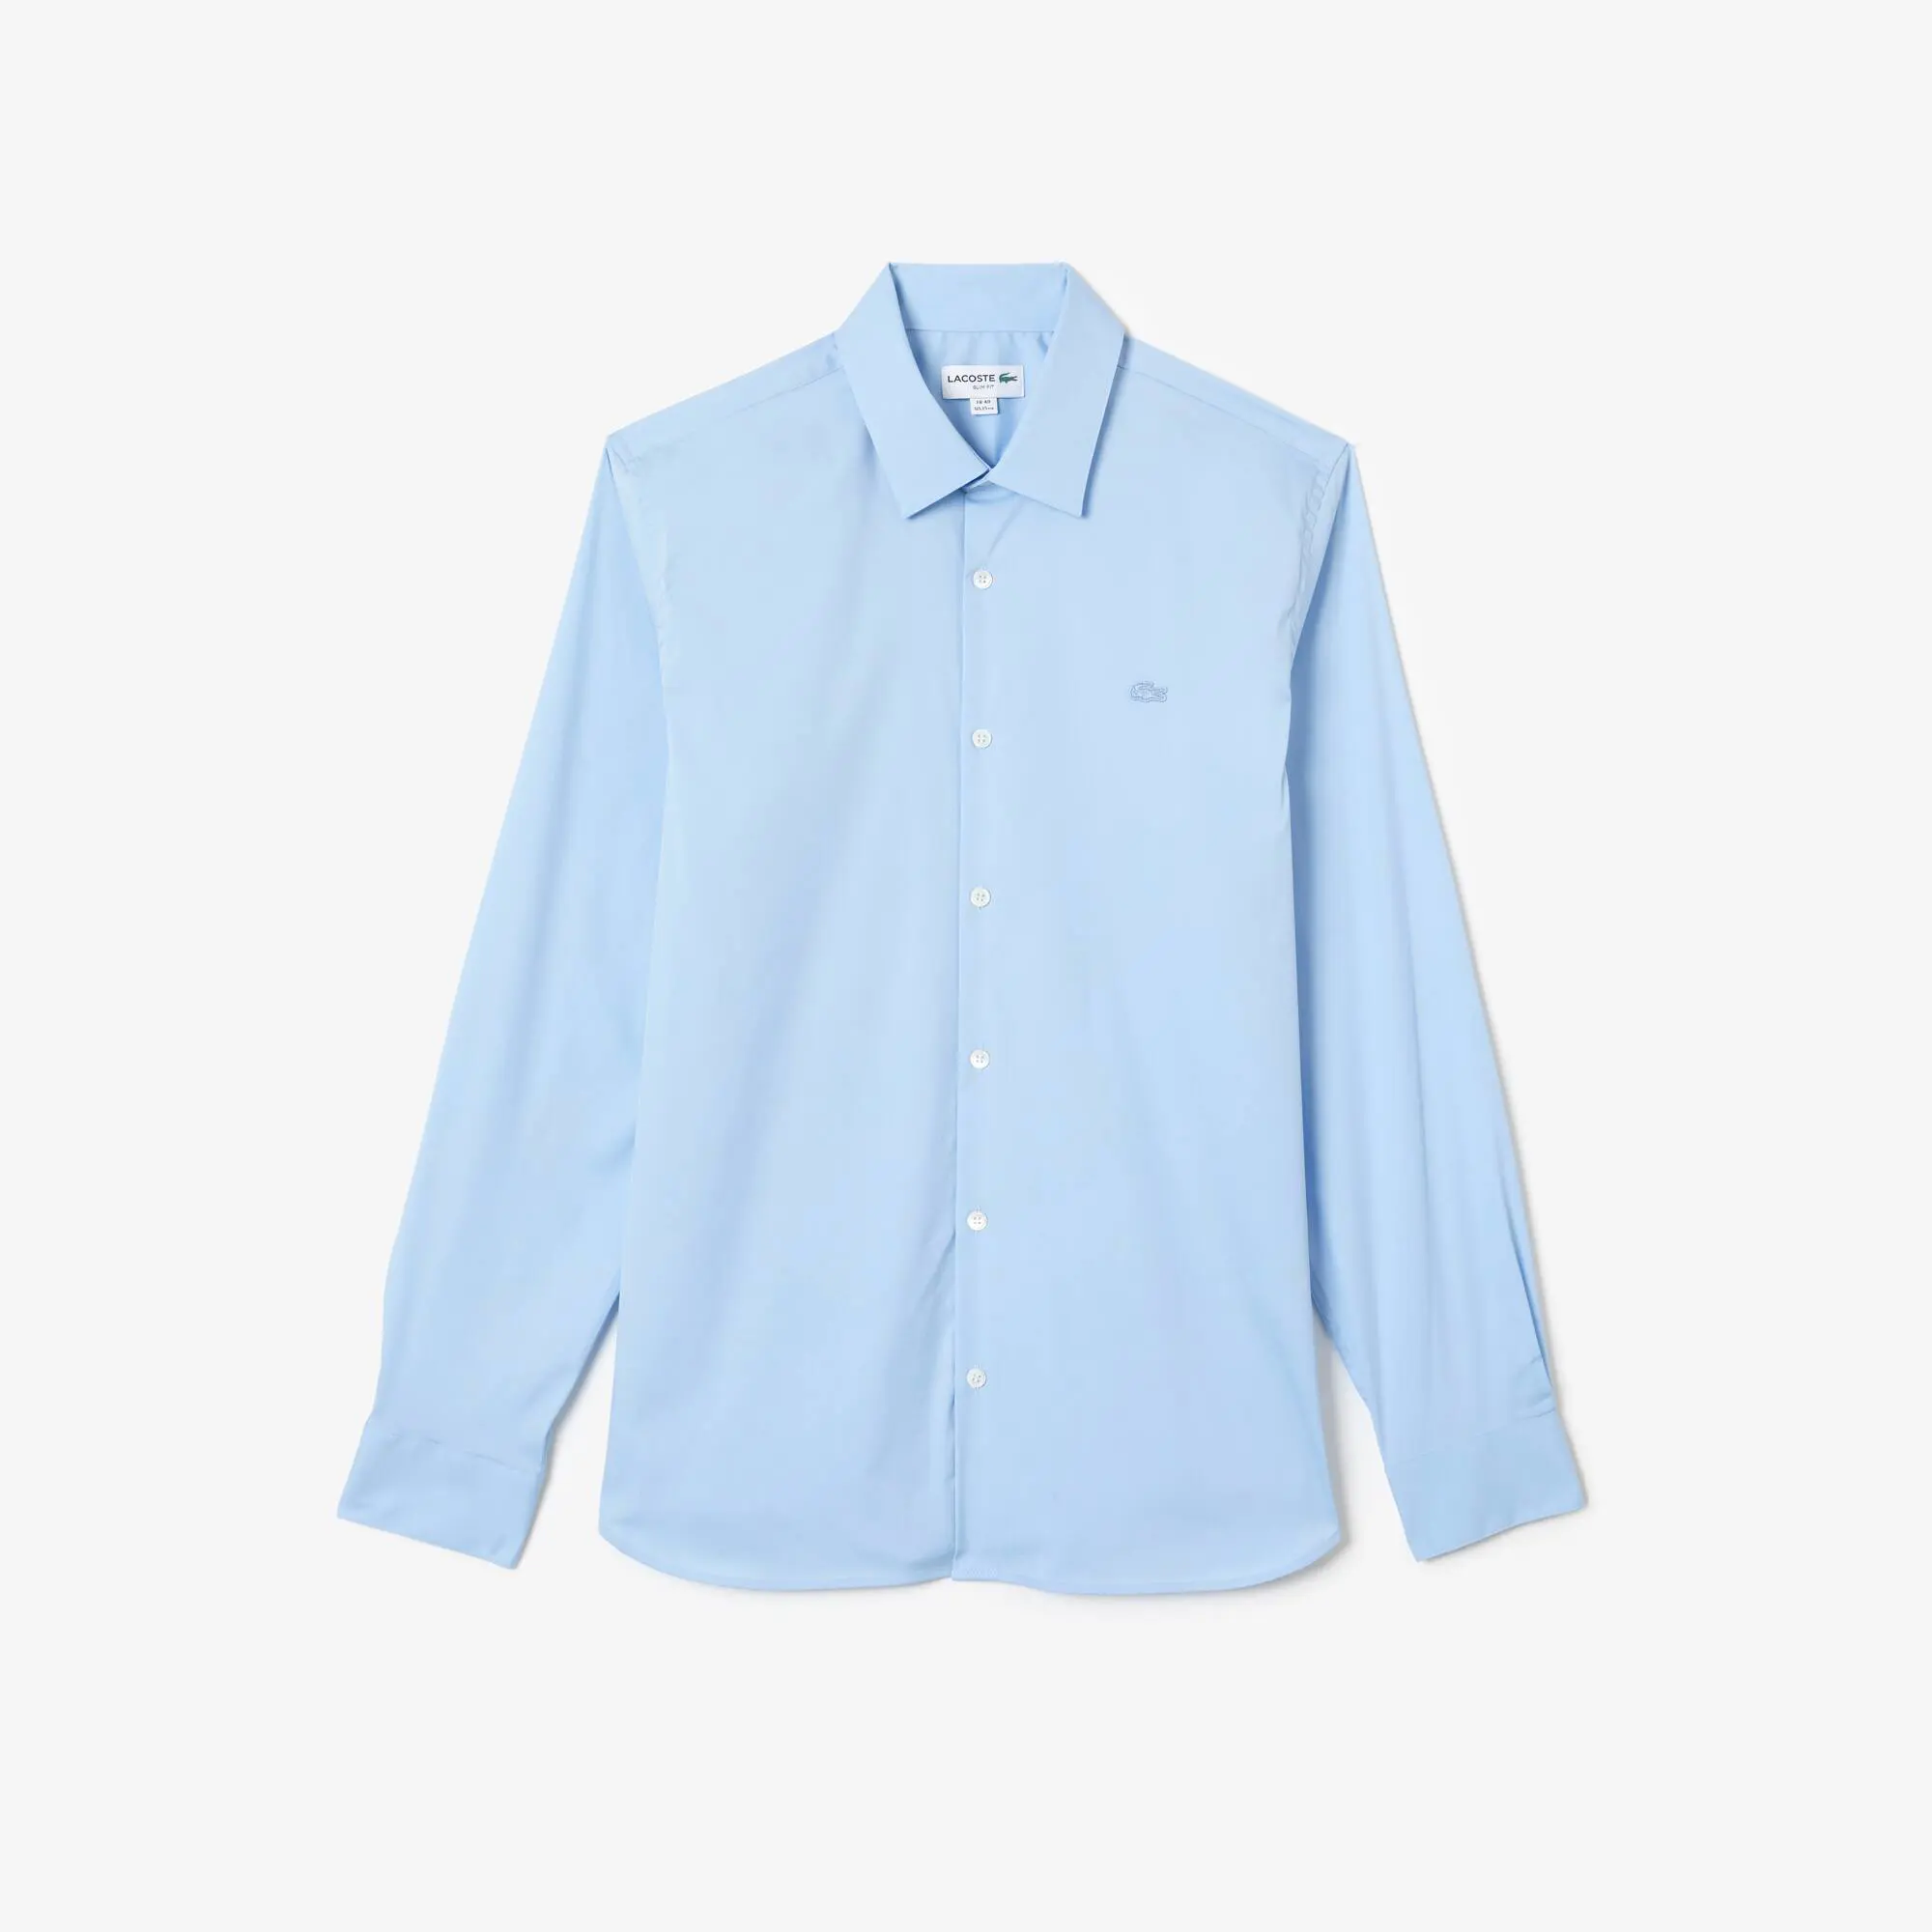 Lacoste Men's Slim Fit French Collar Cotton Poplin Shirt. 2